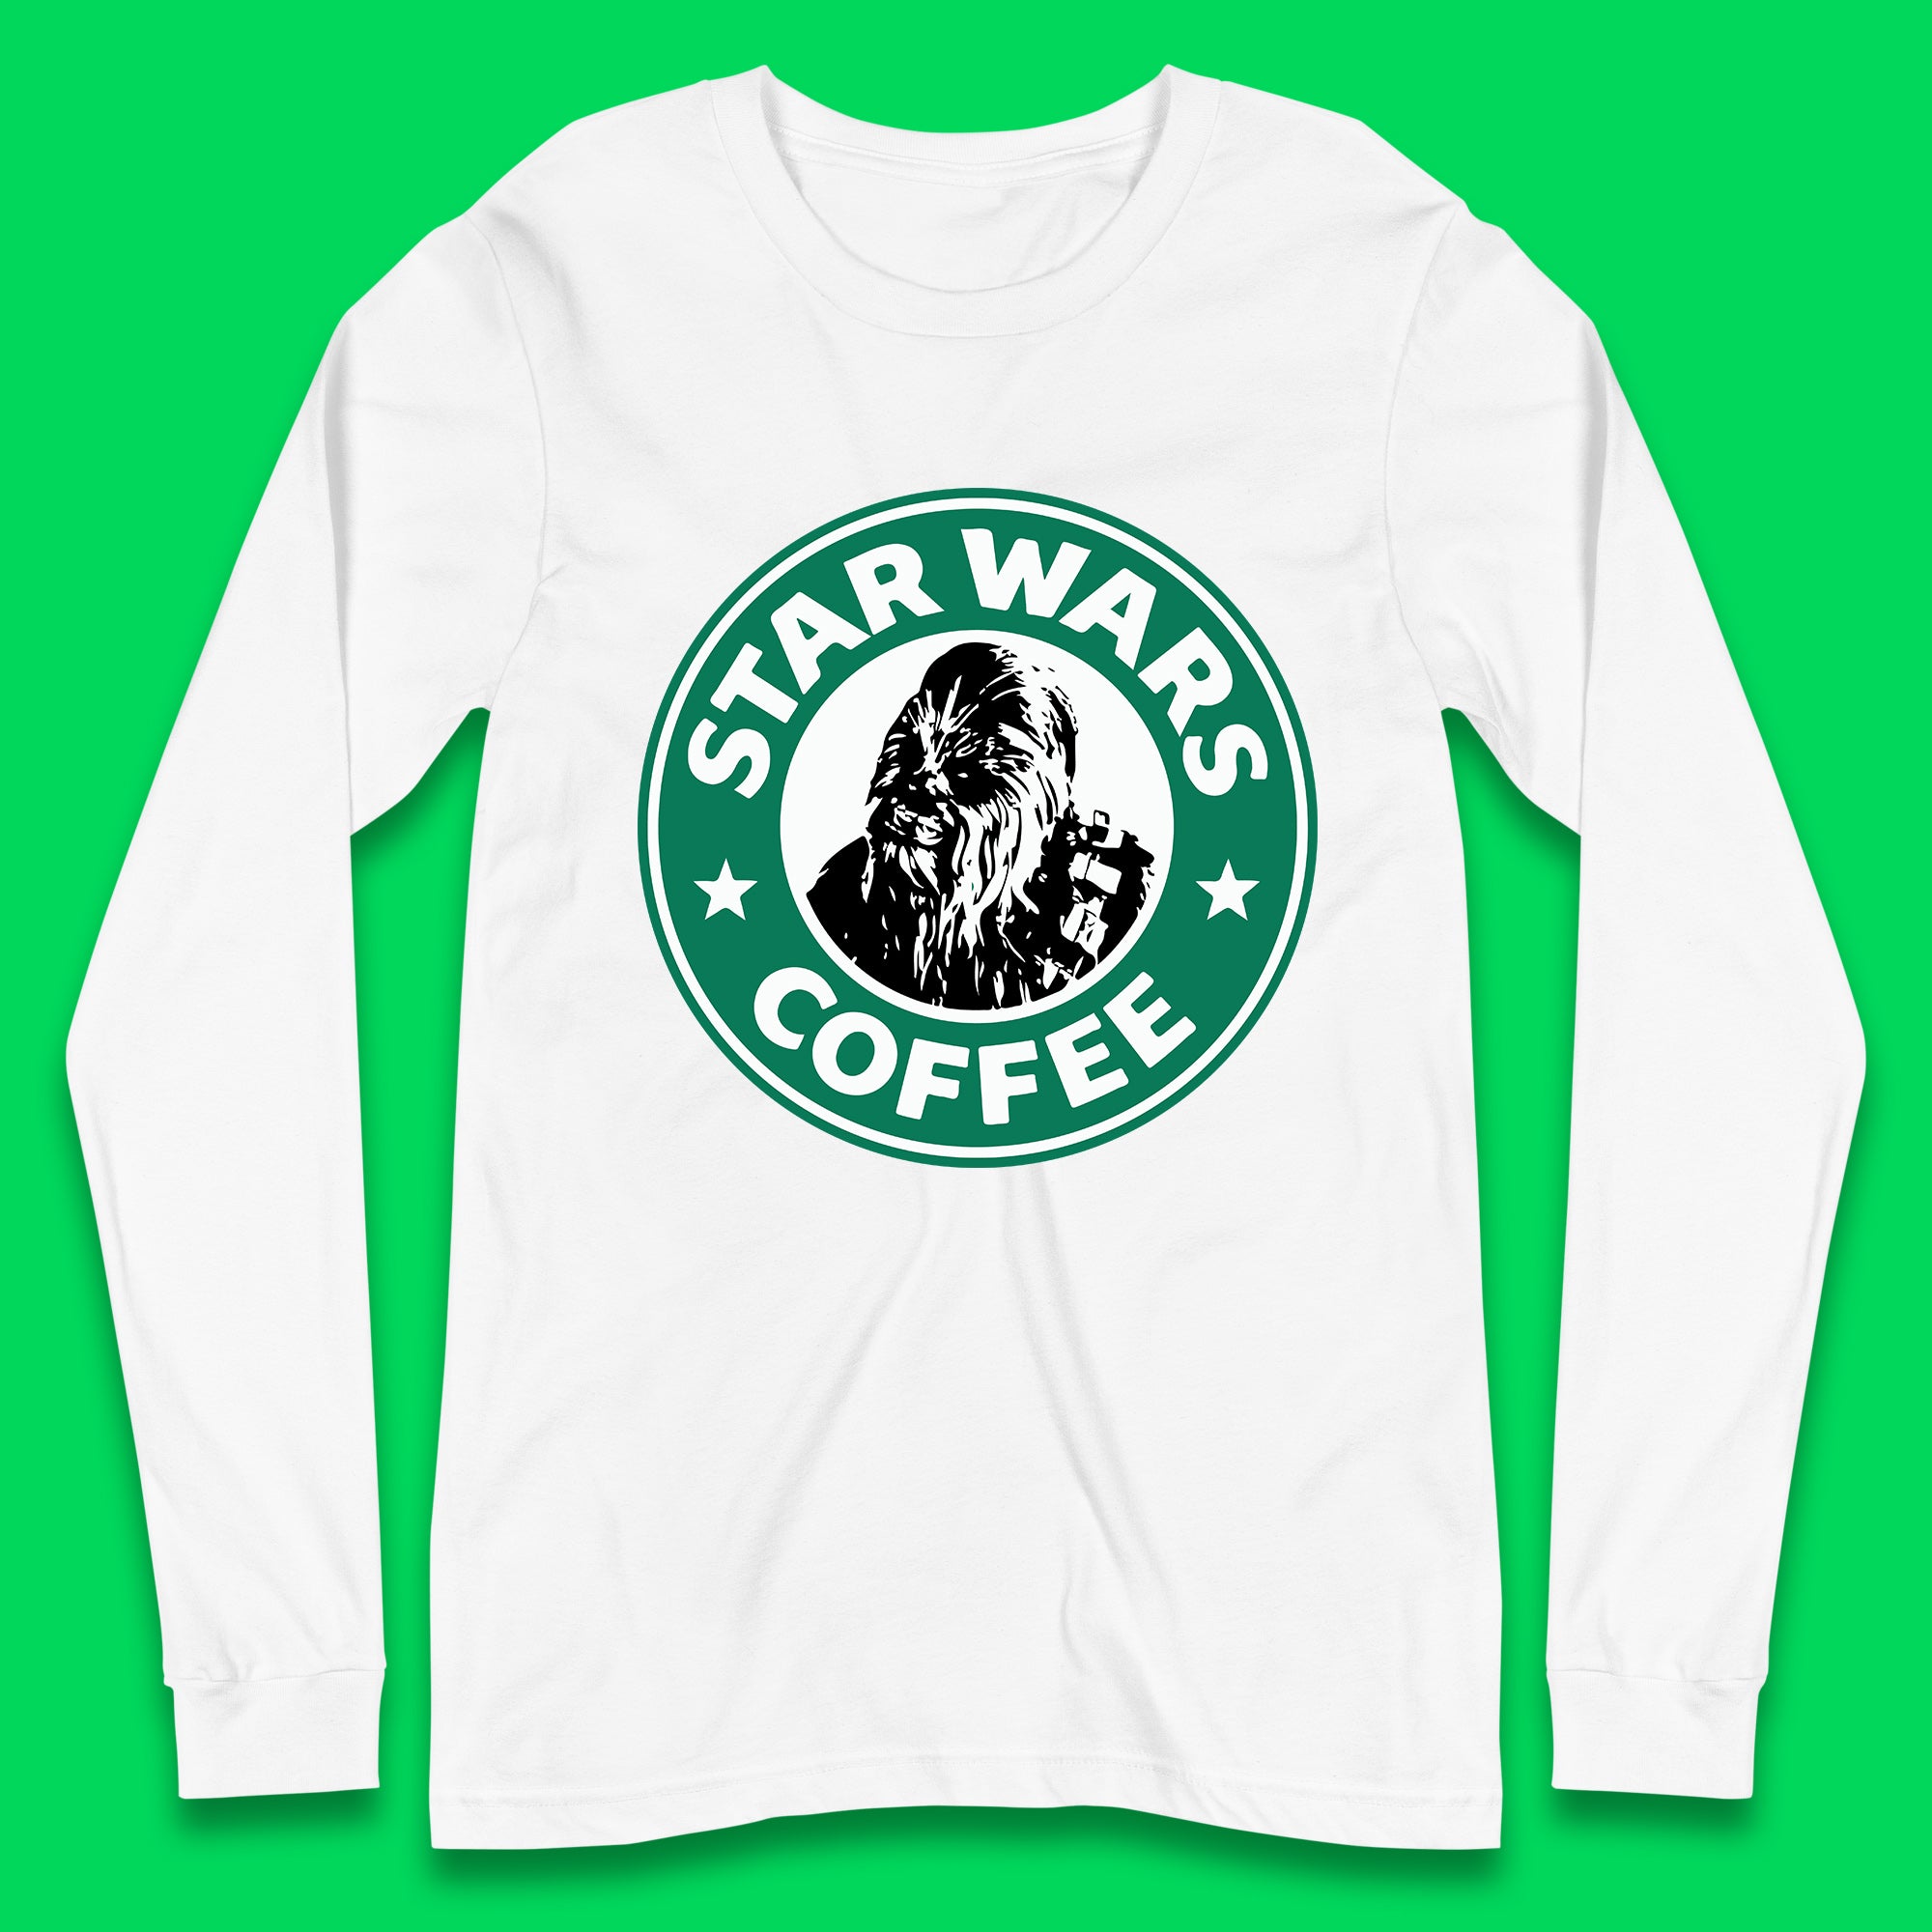 Chewbacca Star Wars Coffee Sci-fi Action Adventure Movie Character Starbucks Coffee Spoof 46th Anniversary Long Sleeve T Shirt